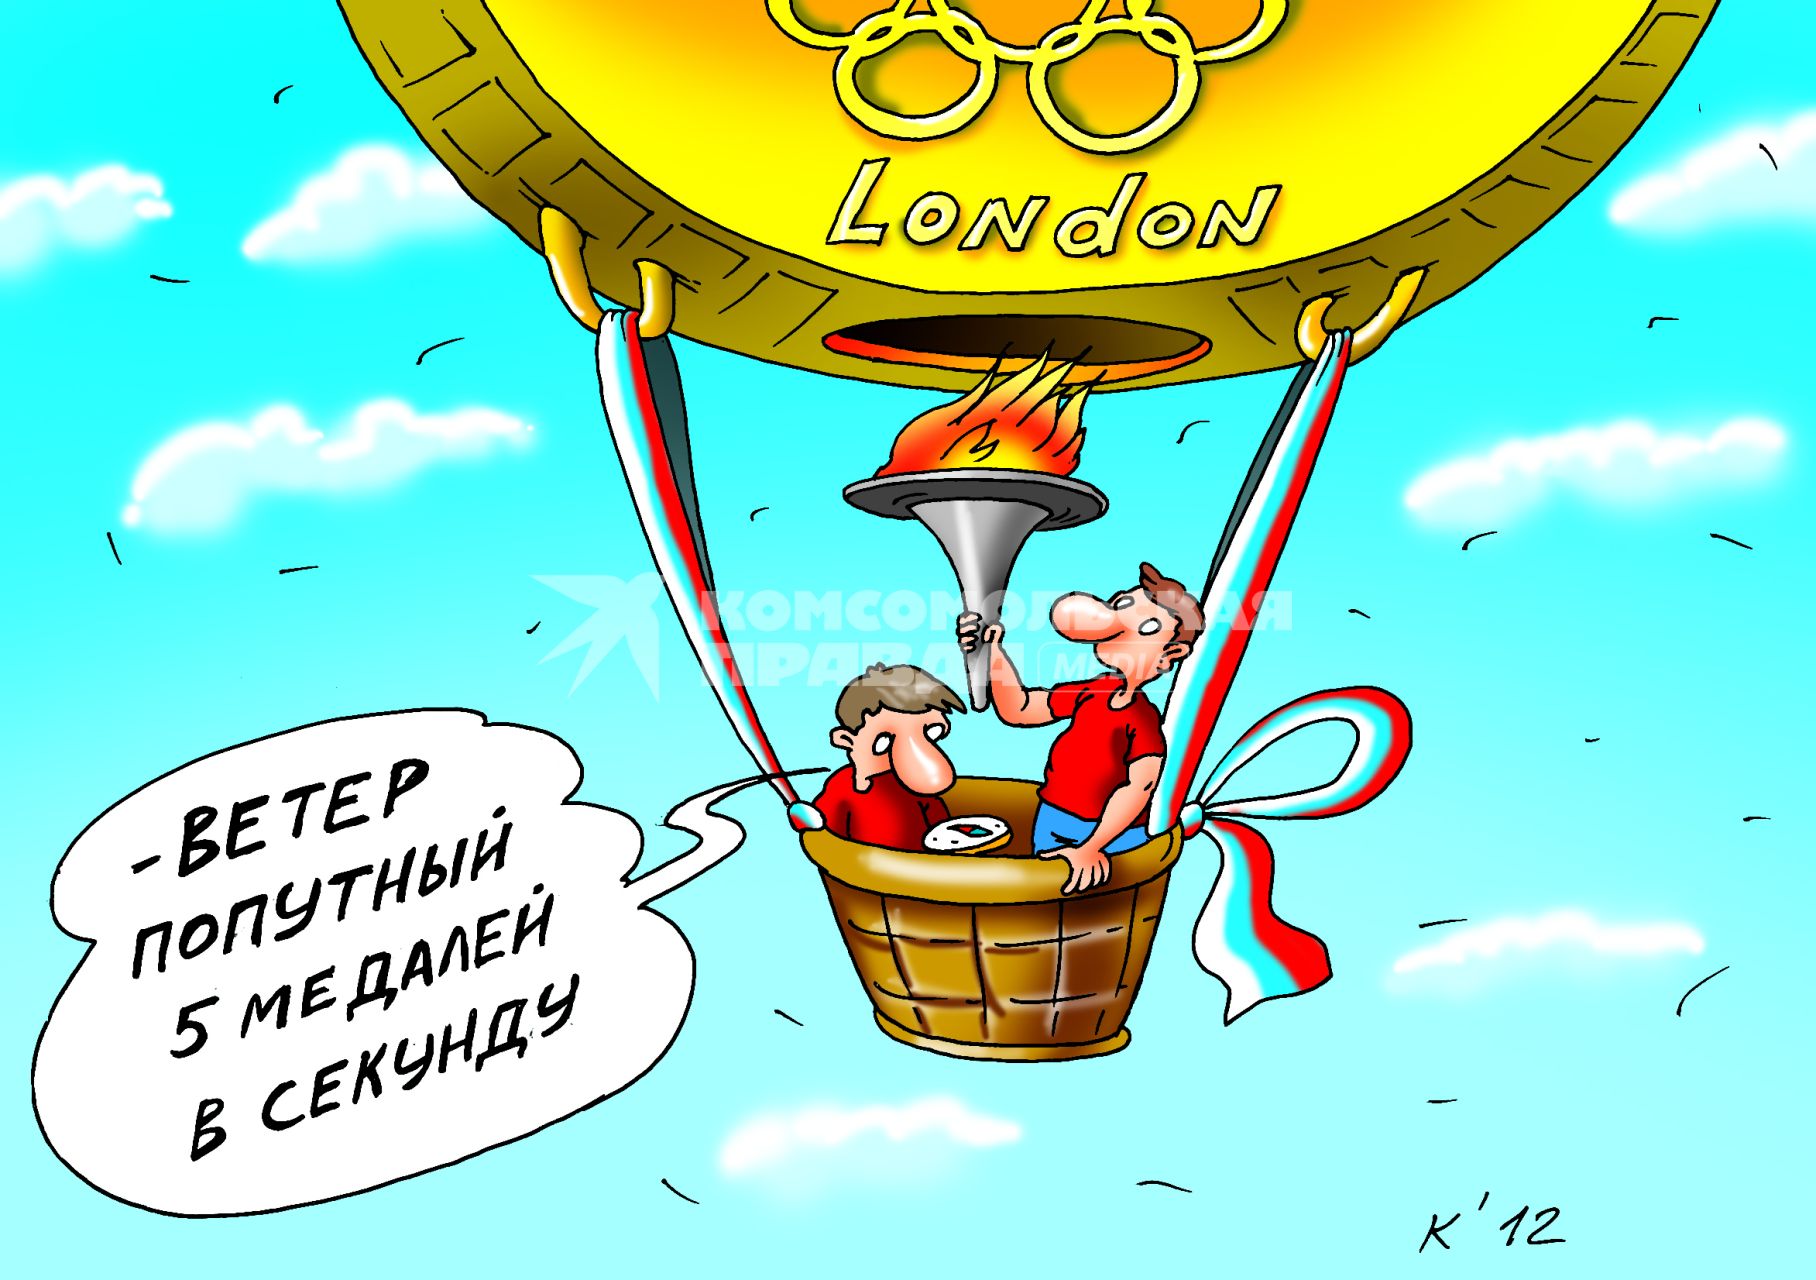 Карикатура на тему олимпийских игр.